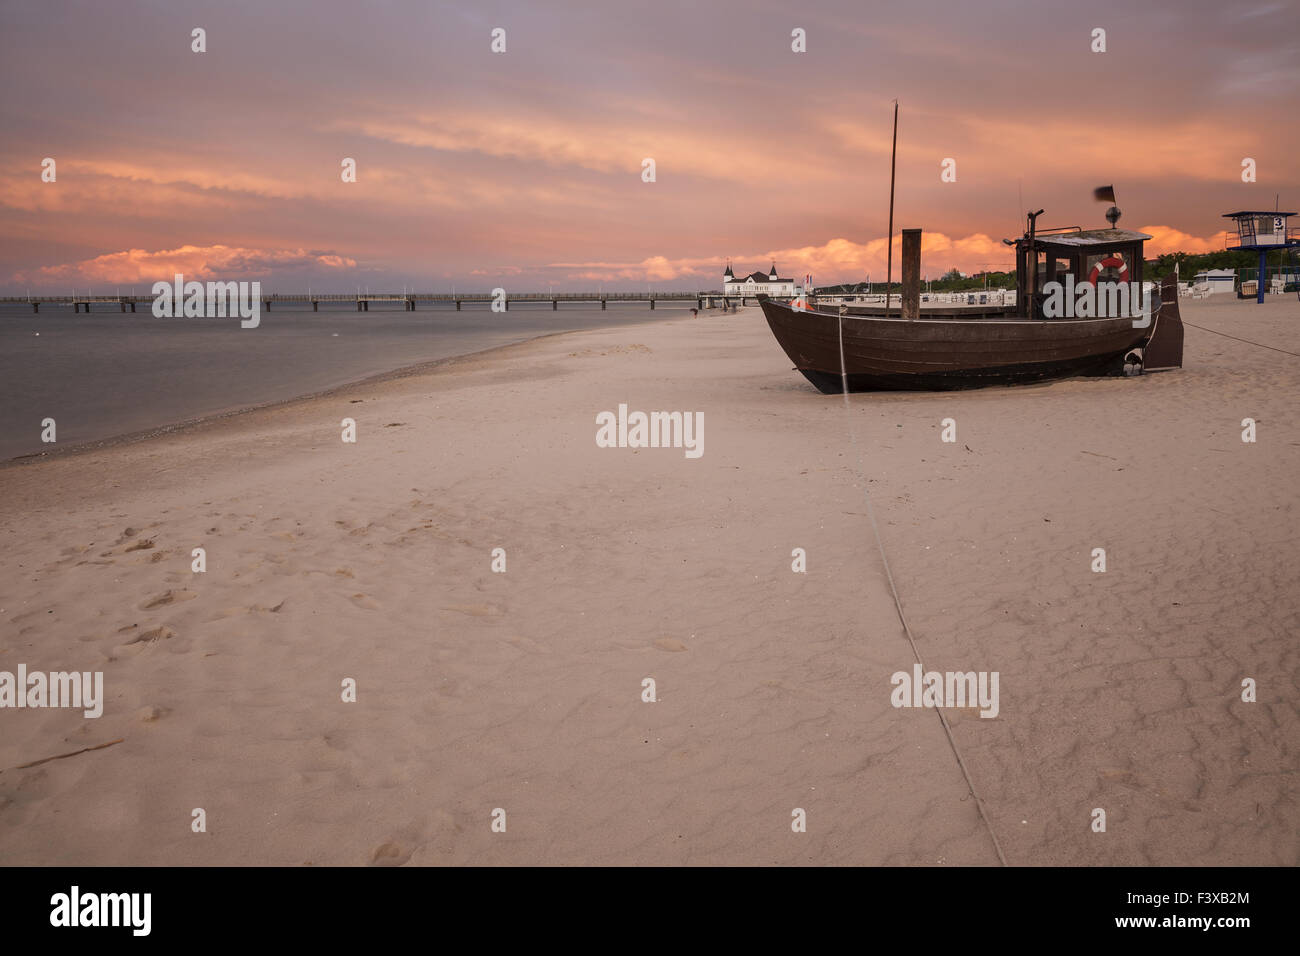 fishing boat on the beach Stock Photo